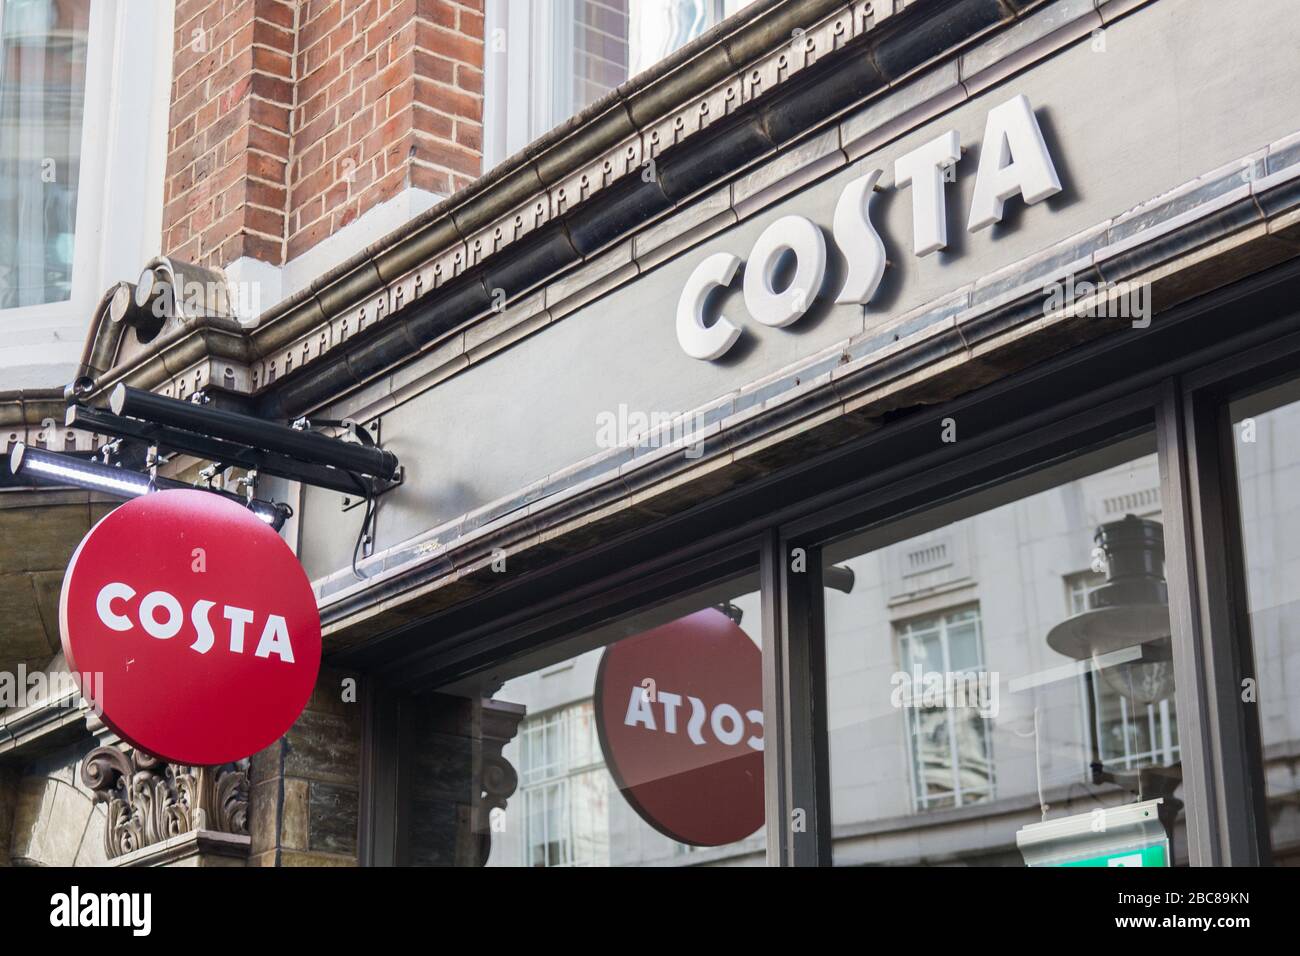 Costa Coffee- catena britannica di caffè High Street- logo esterno / segnaletica- Londra Foto Stock